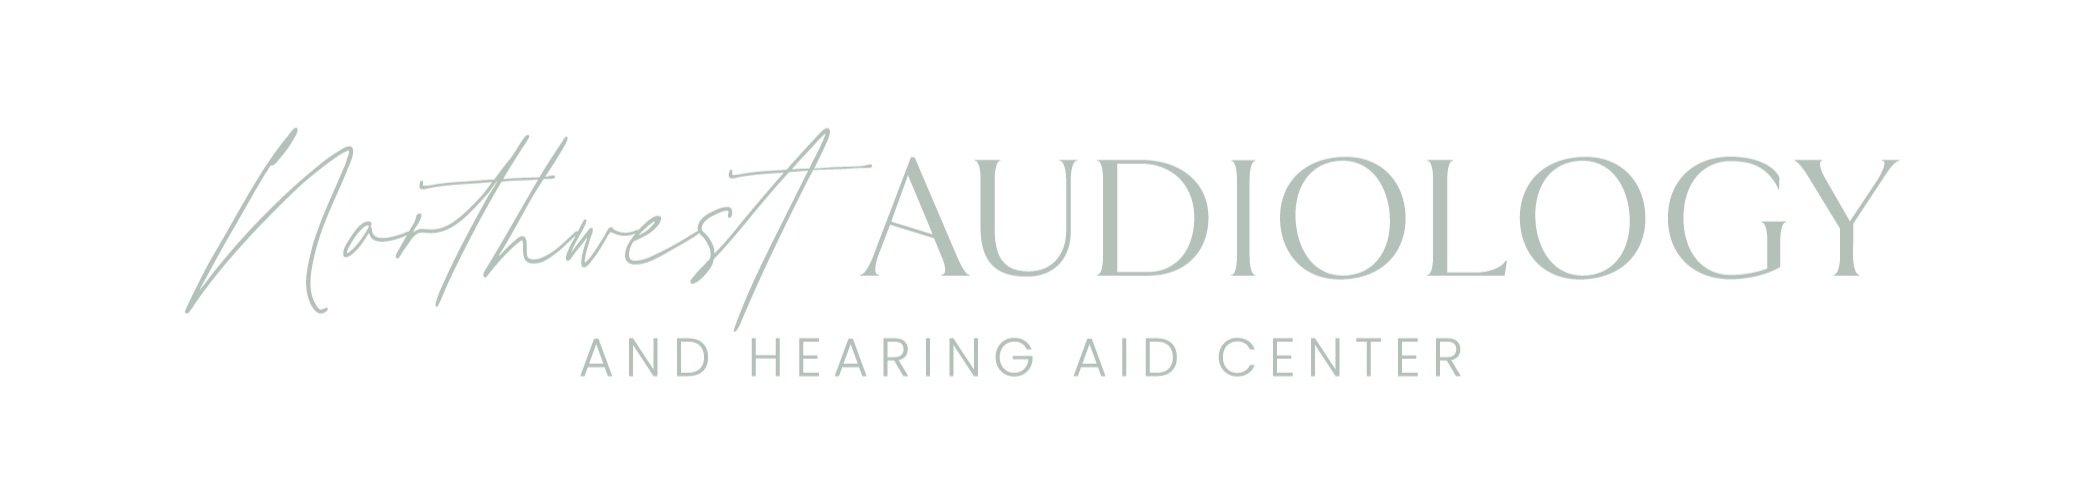 Northwest Audiology & Hearing Aid Center